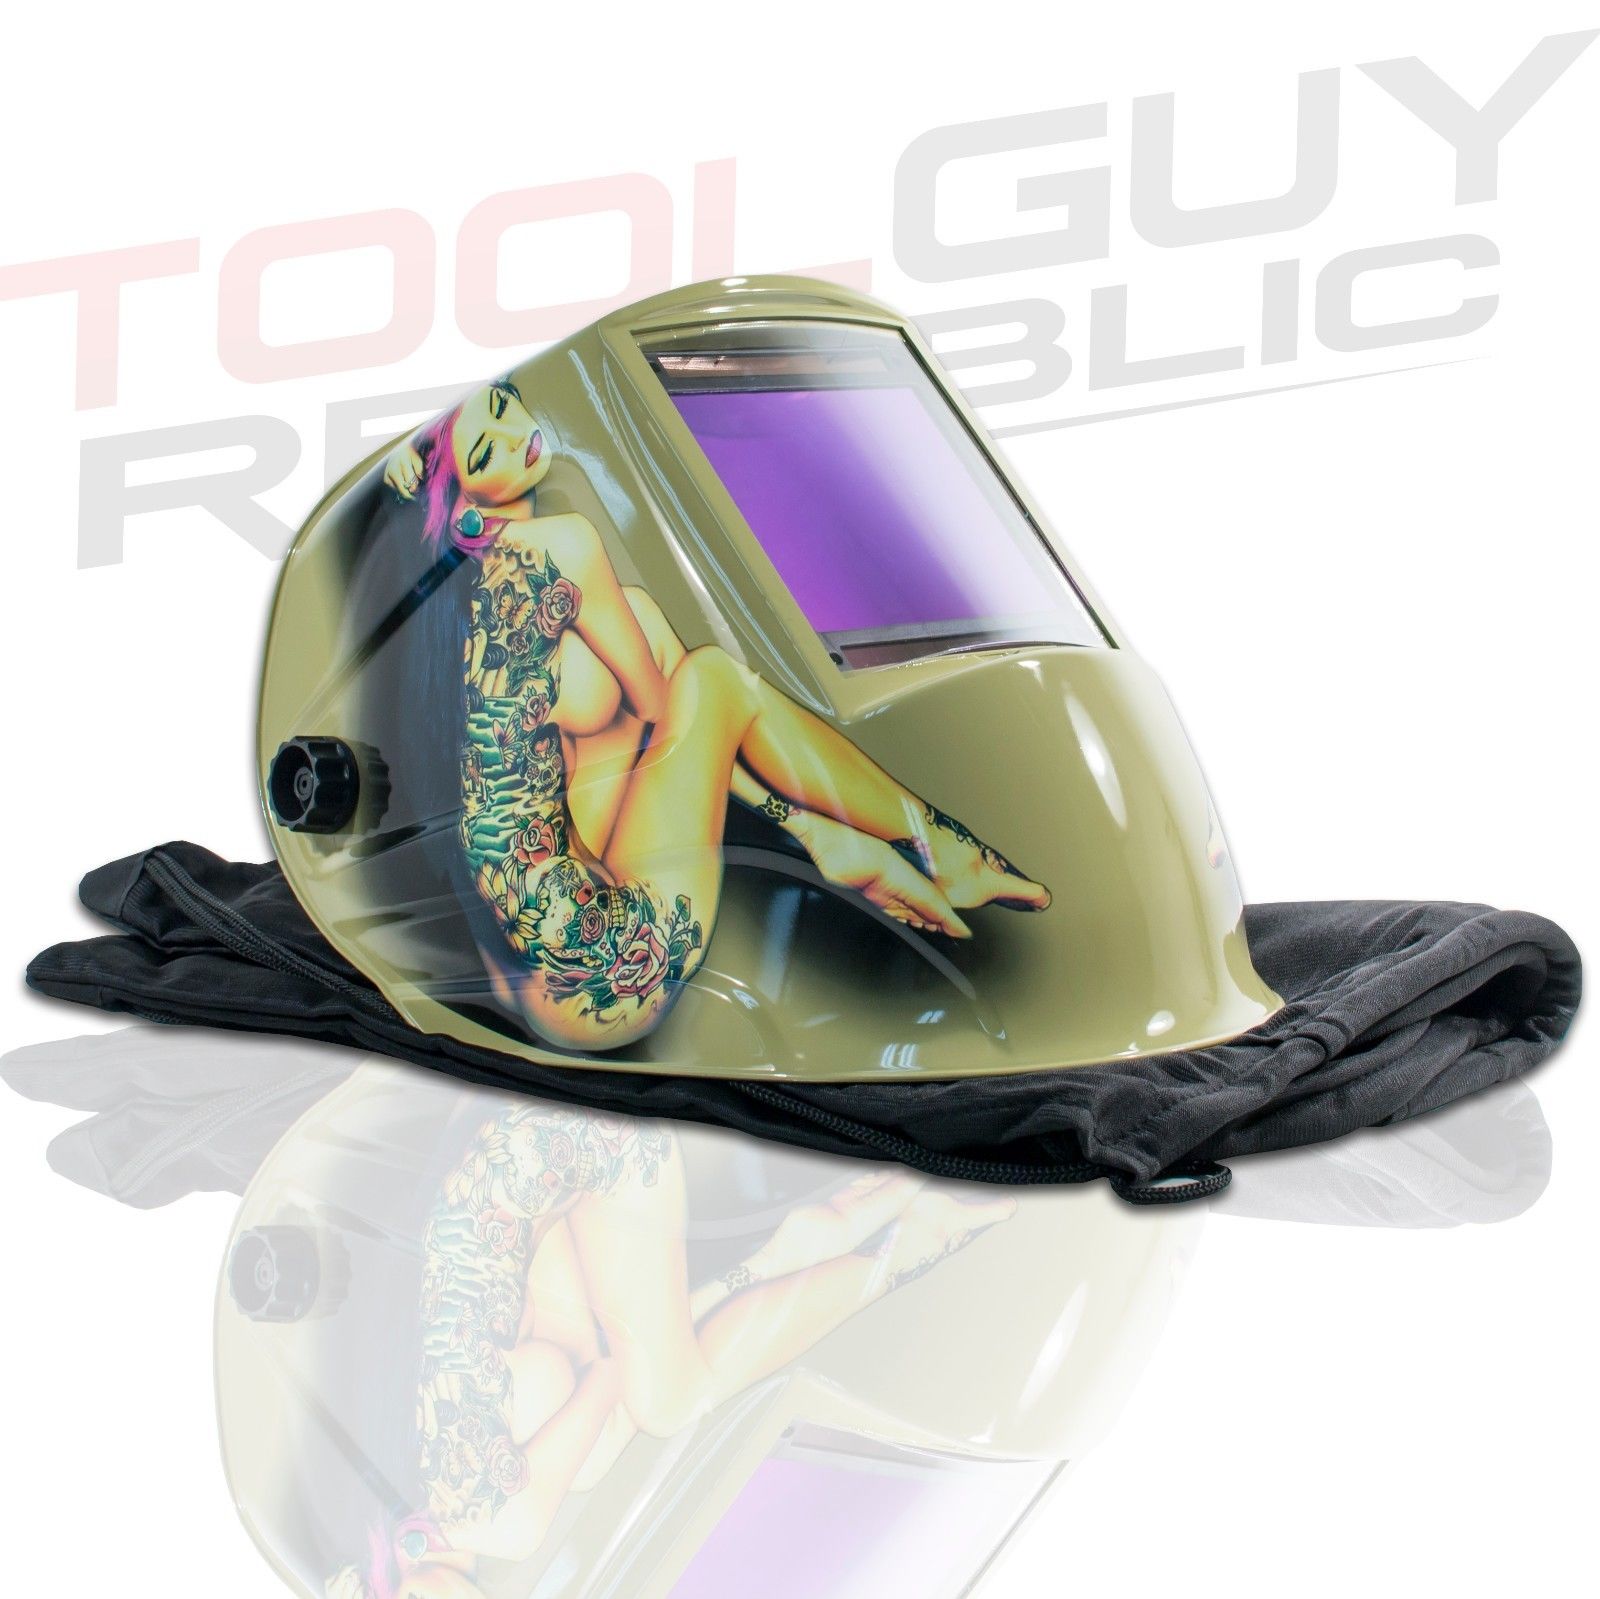 TGR Extra Large View Auto Darkening Welding Helmet - 4" x 3.65" - Tool Guy Republic